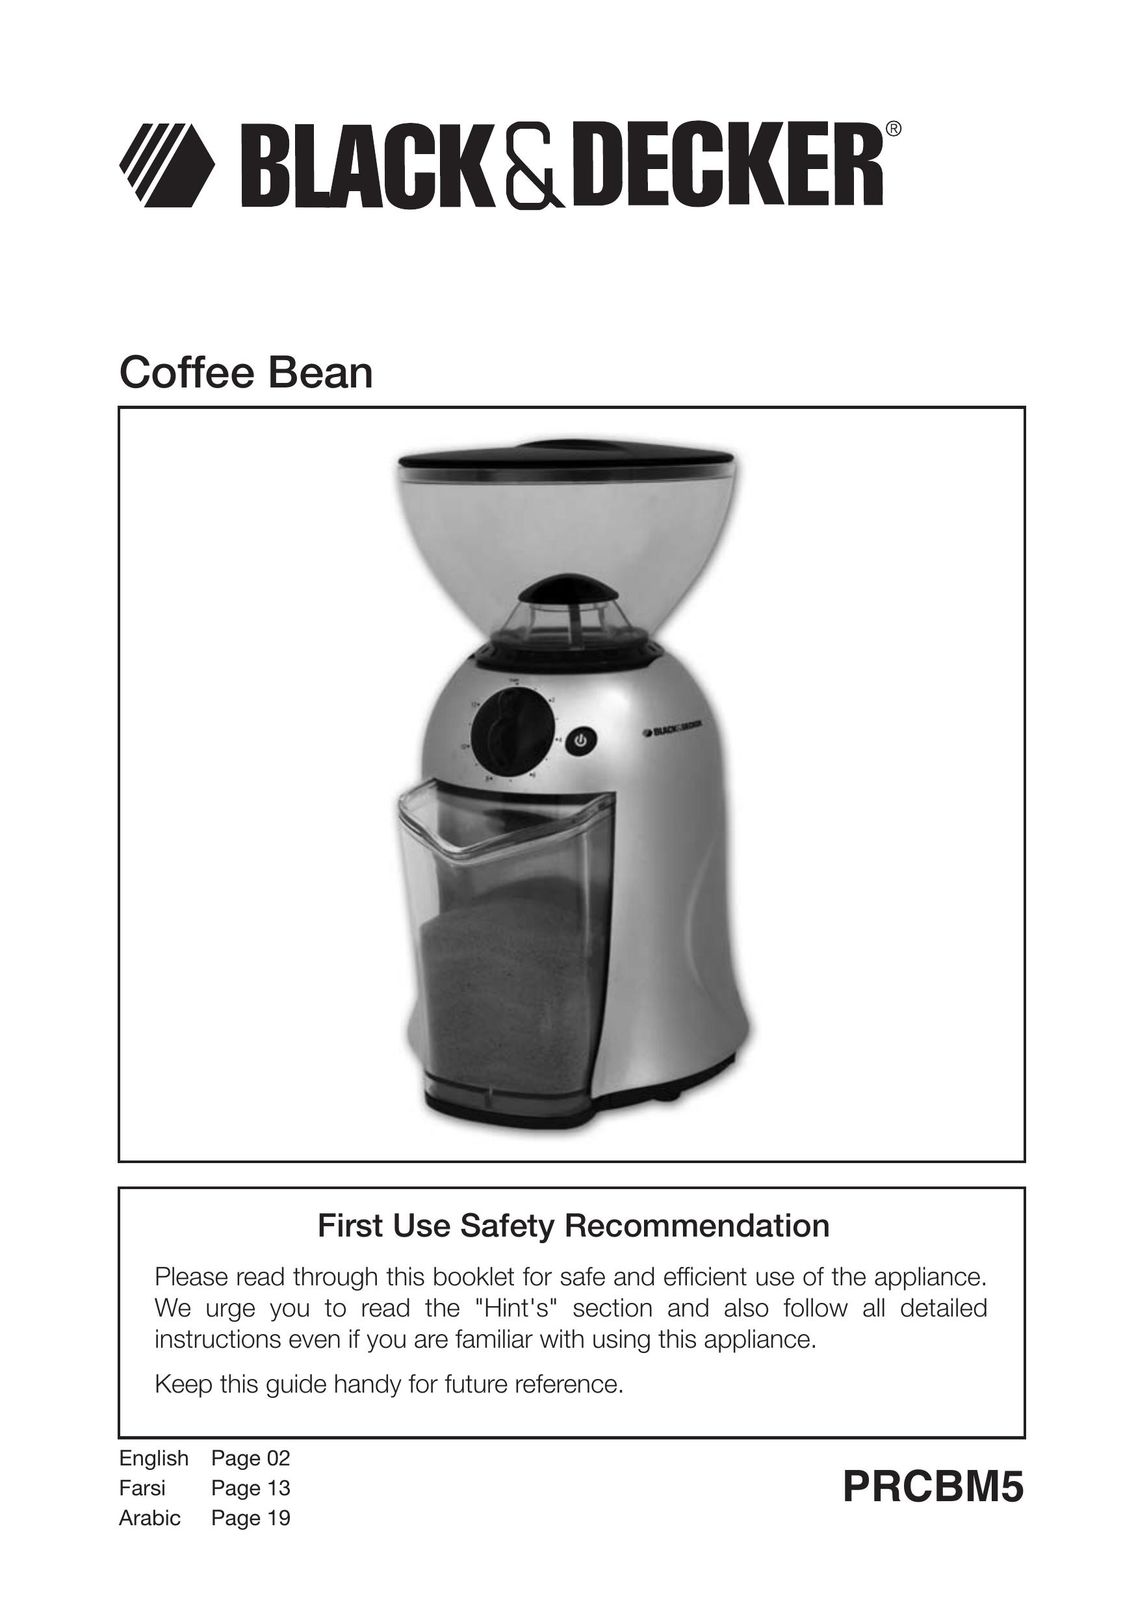 Black & Decker PRCBM5 Coffee Grinder User Manual